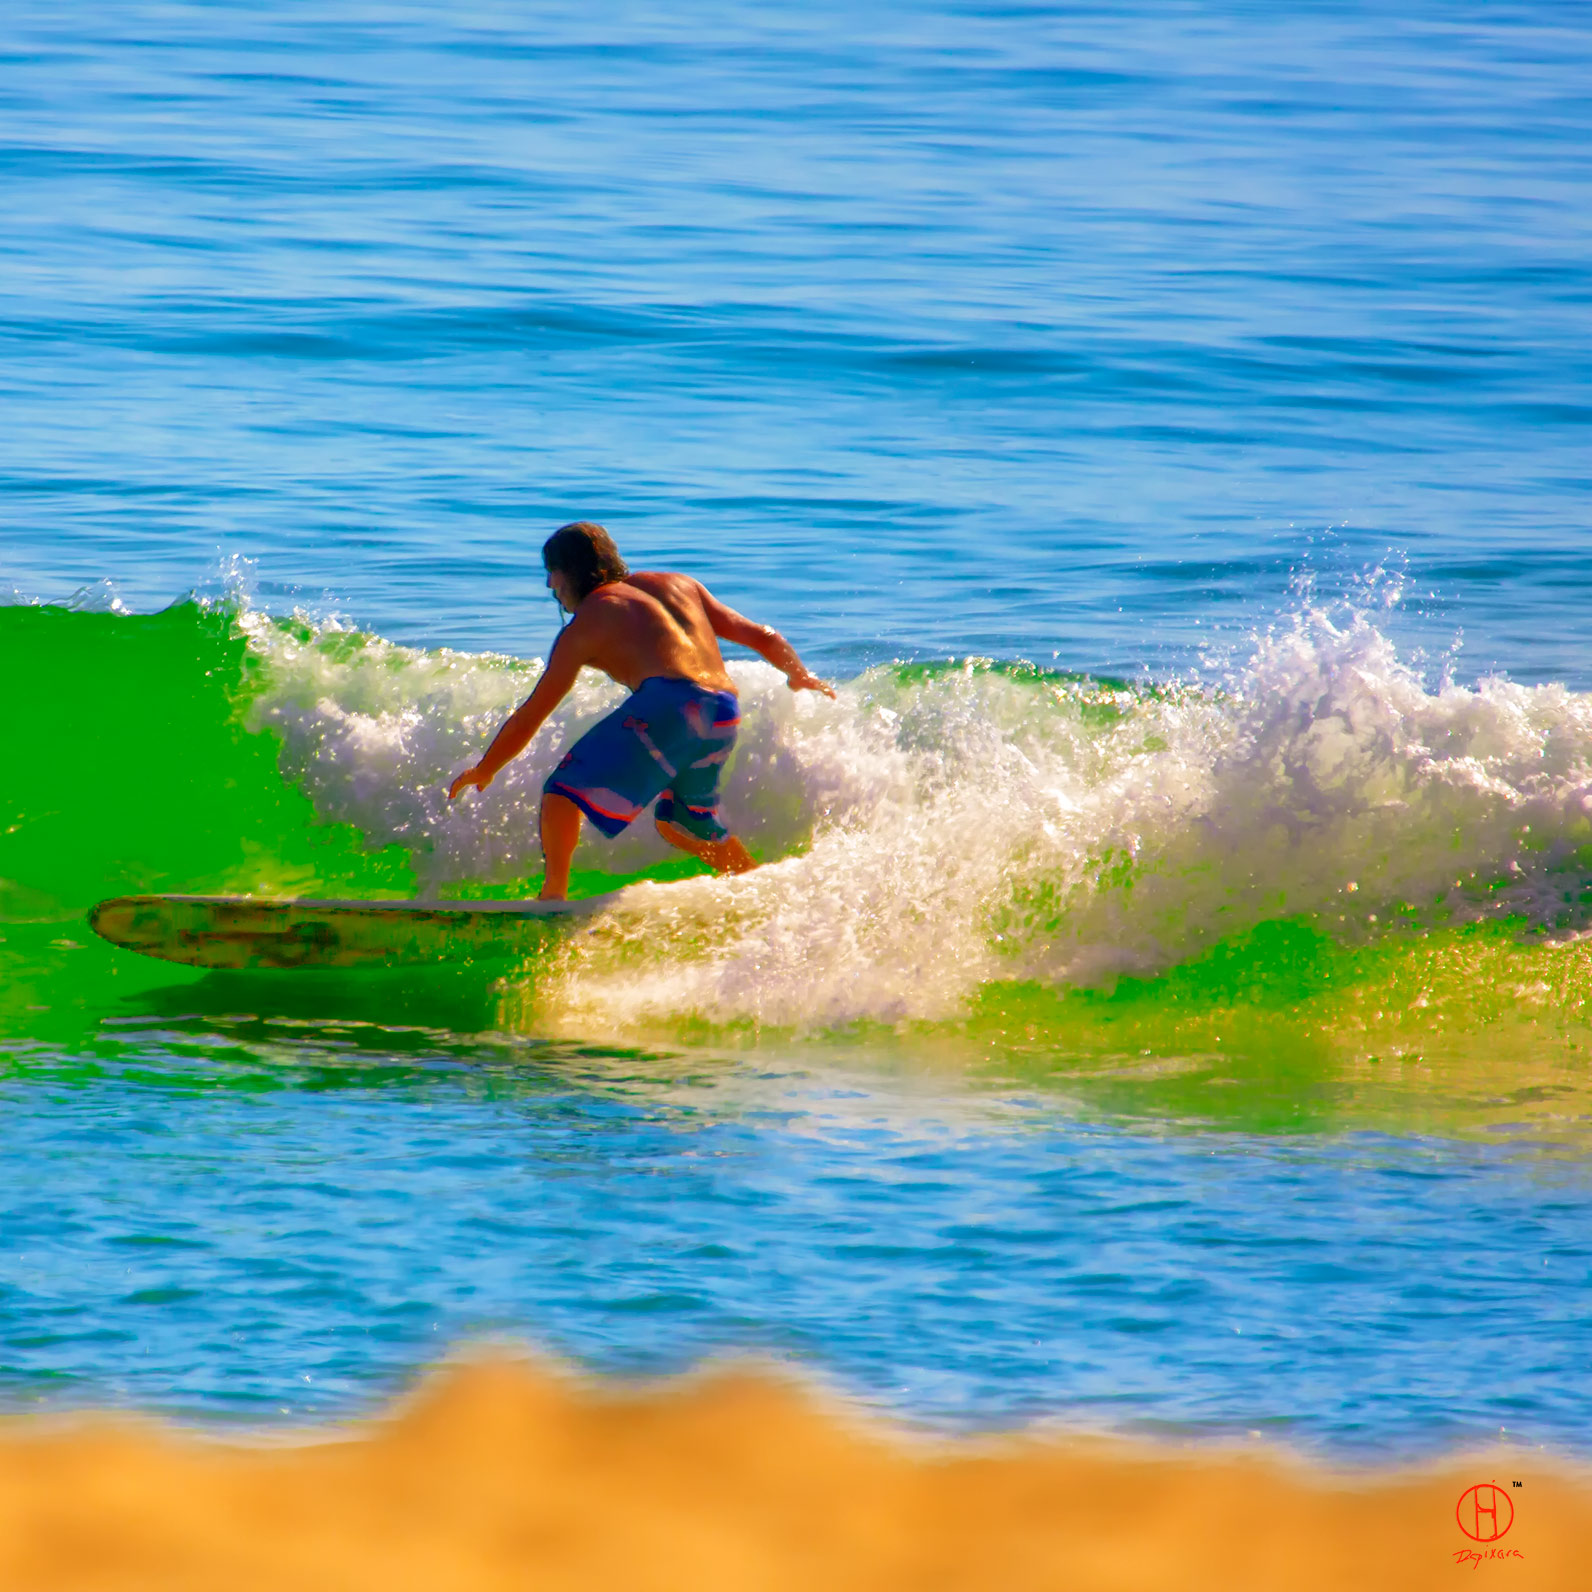 Nauset beach surfer. Surfing, large waves, surfboard. Dapixara Cape Cod art